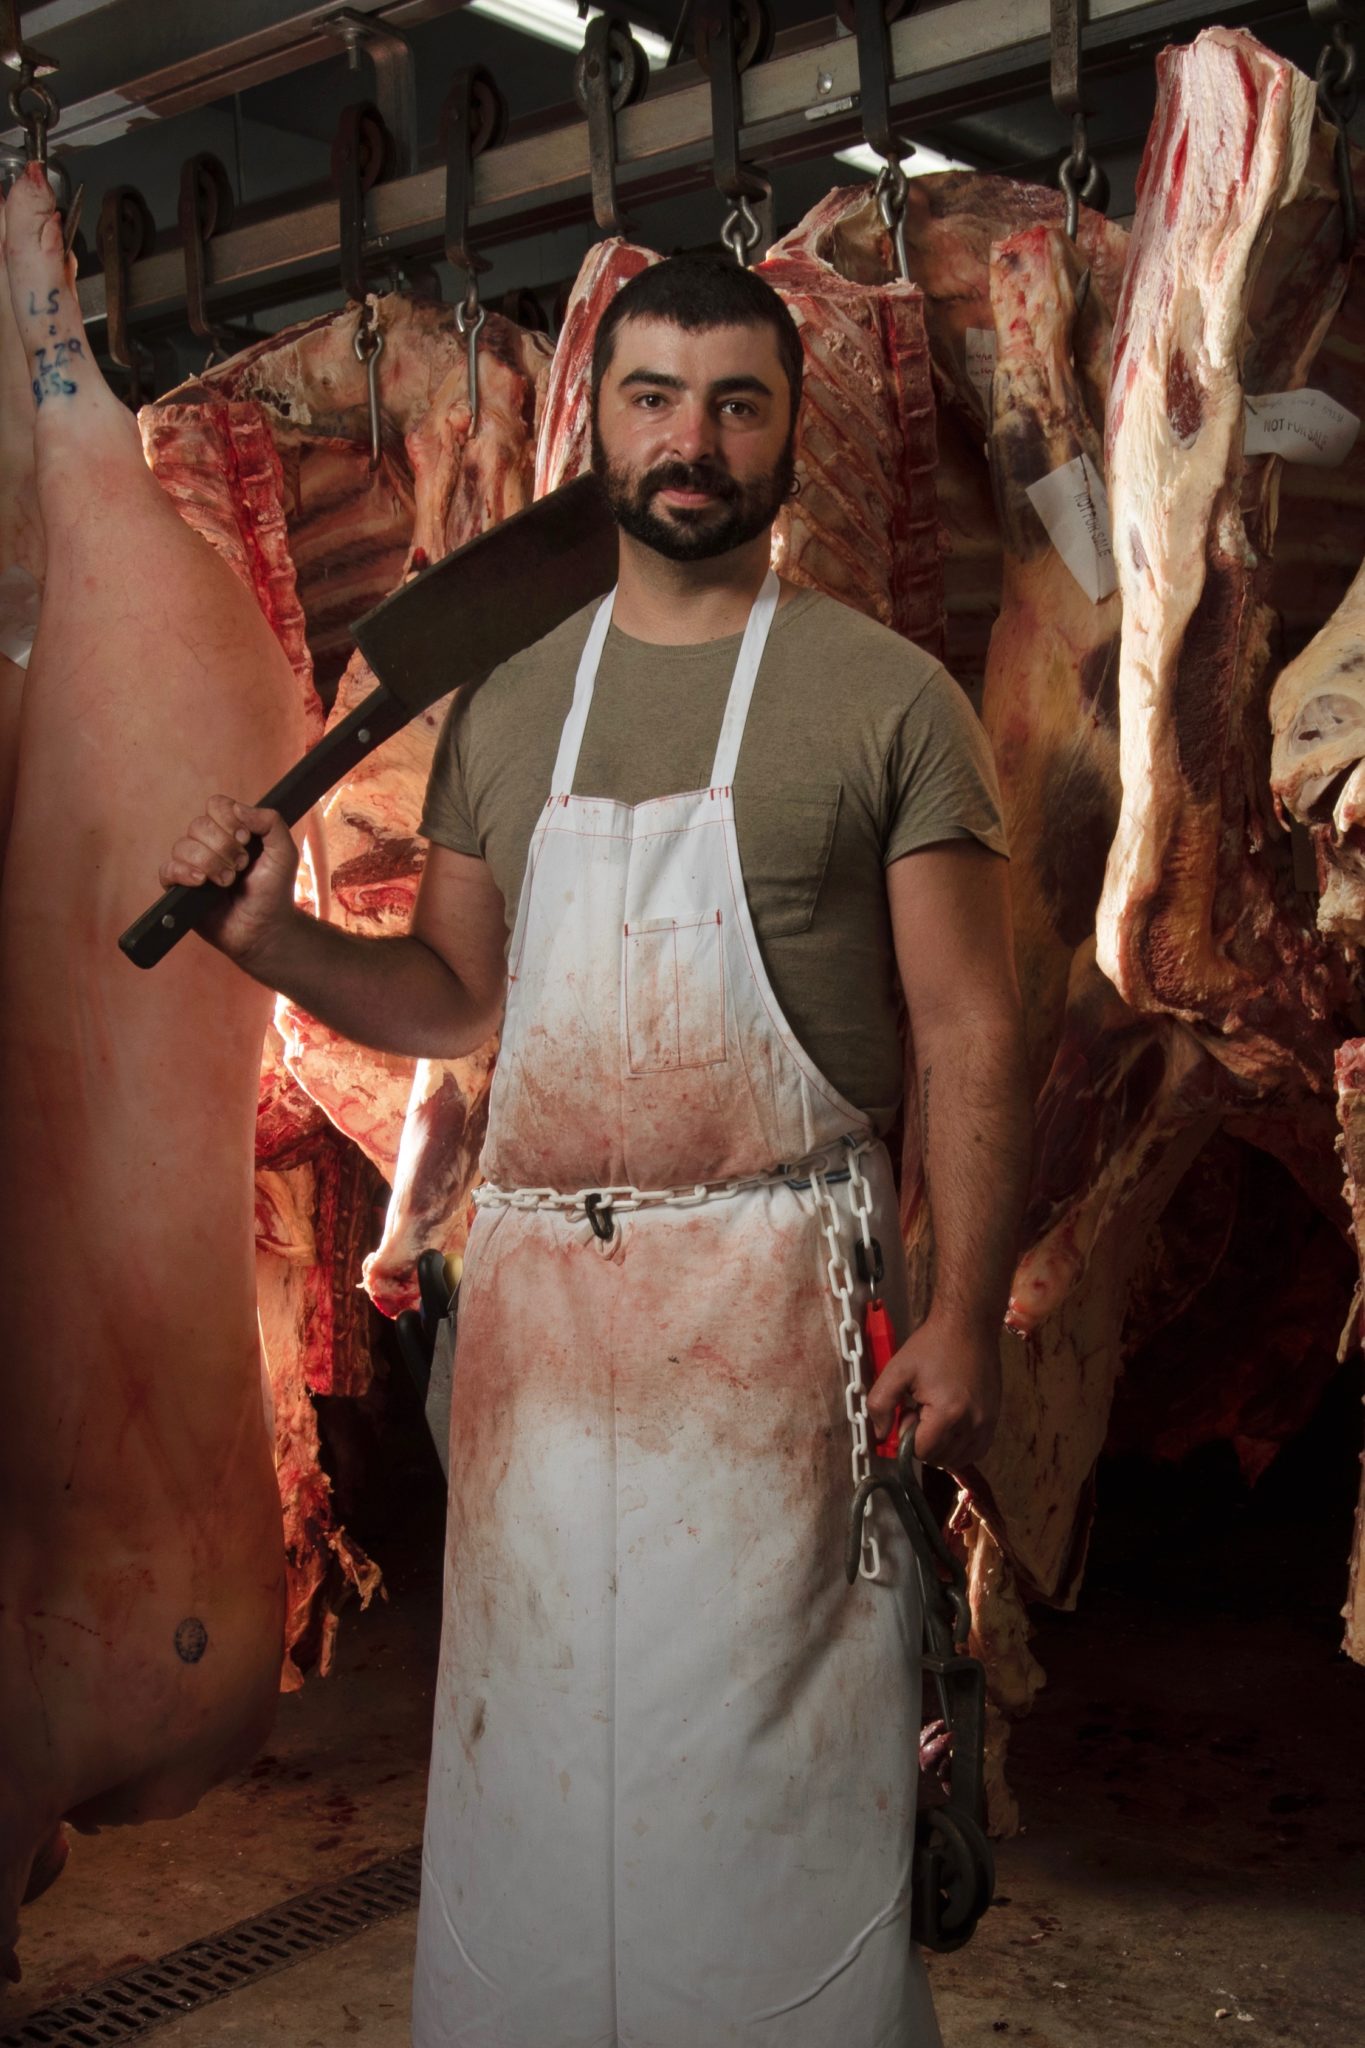 Butcher, Cameron Duhaime, 30, at Bud’s Custom Meats in Penngrove, California on May 18, 2020. (Photo: Erik Castro/for Sonoma Magazine)